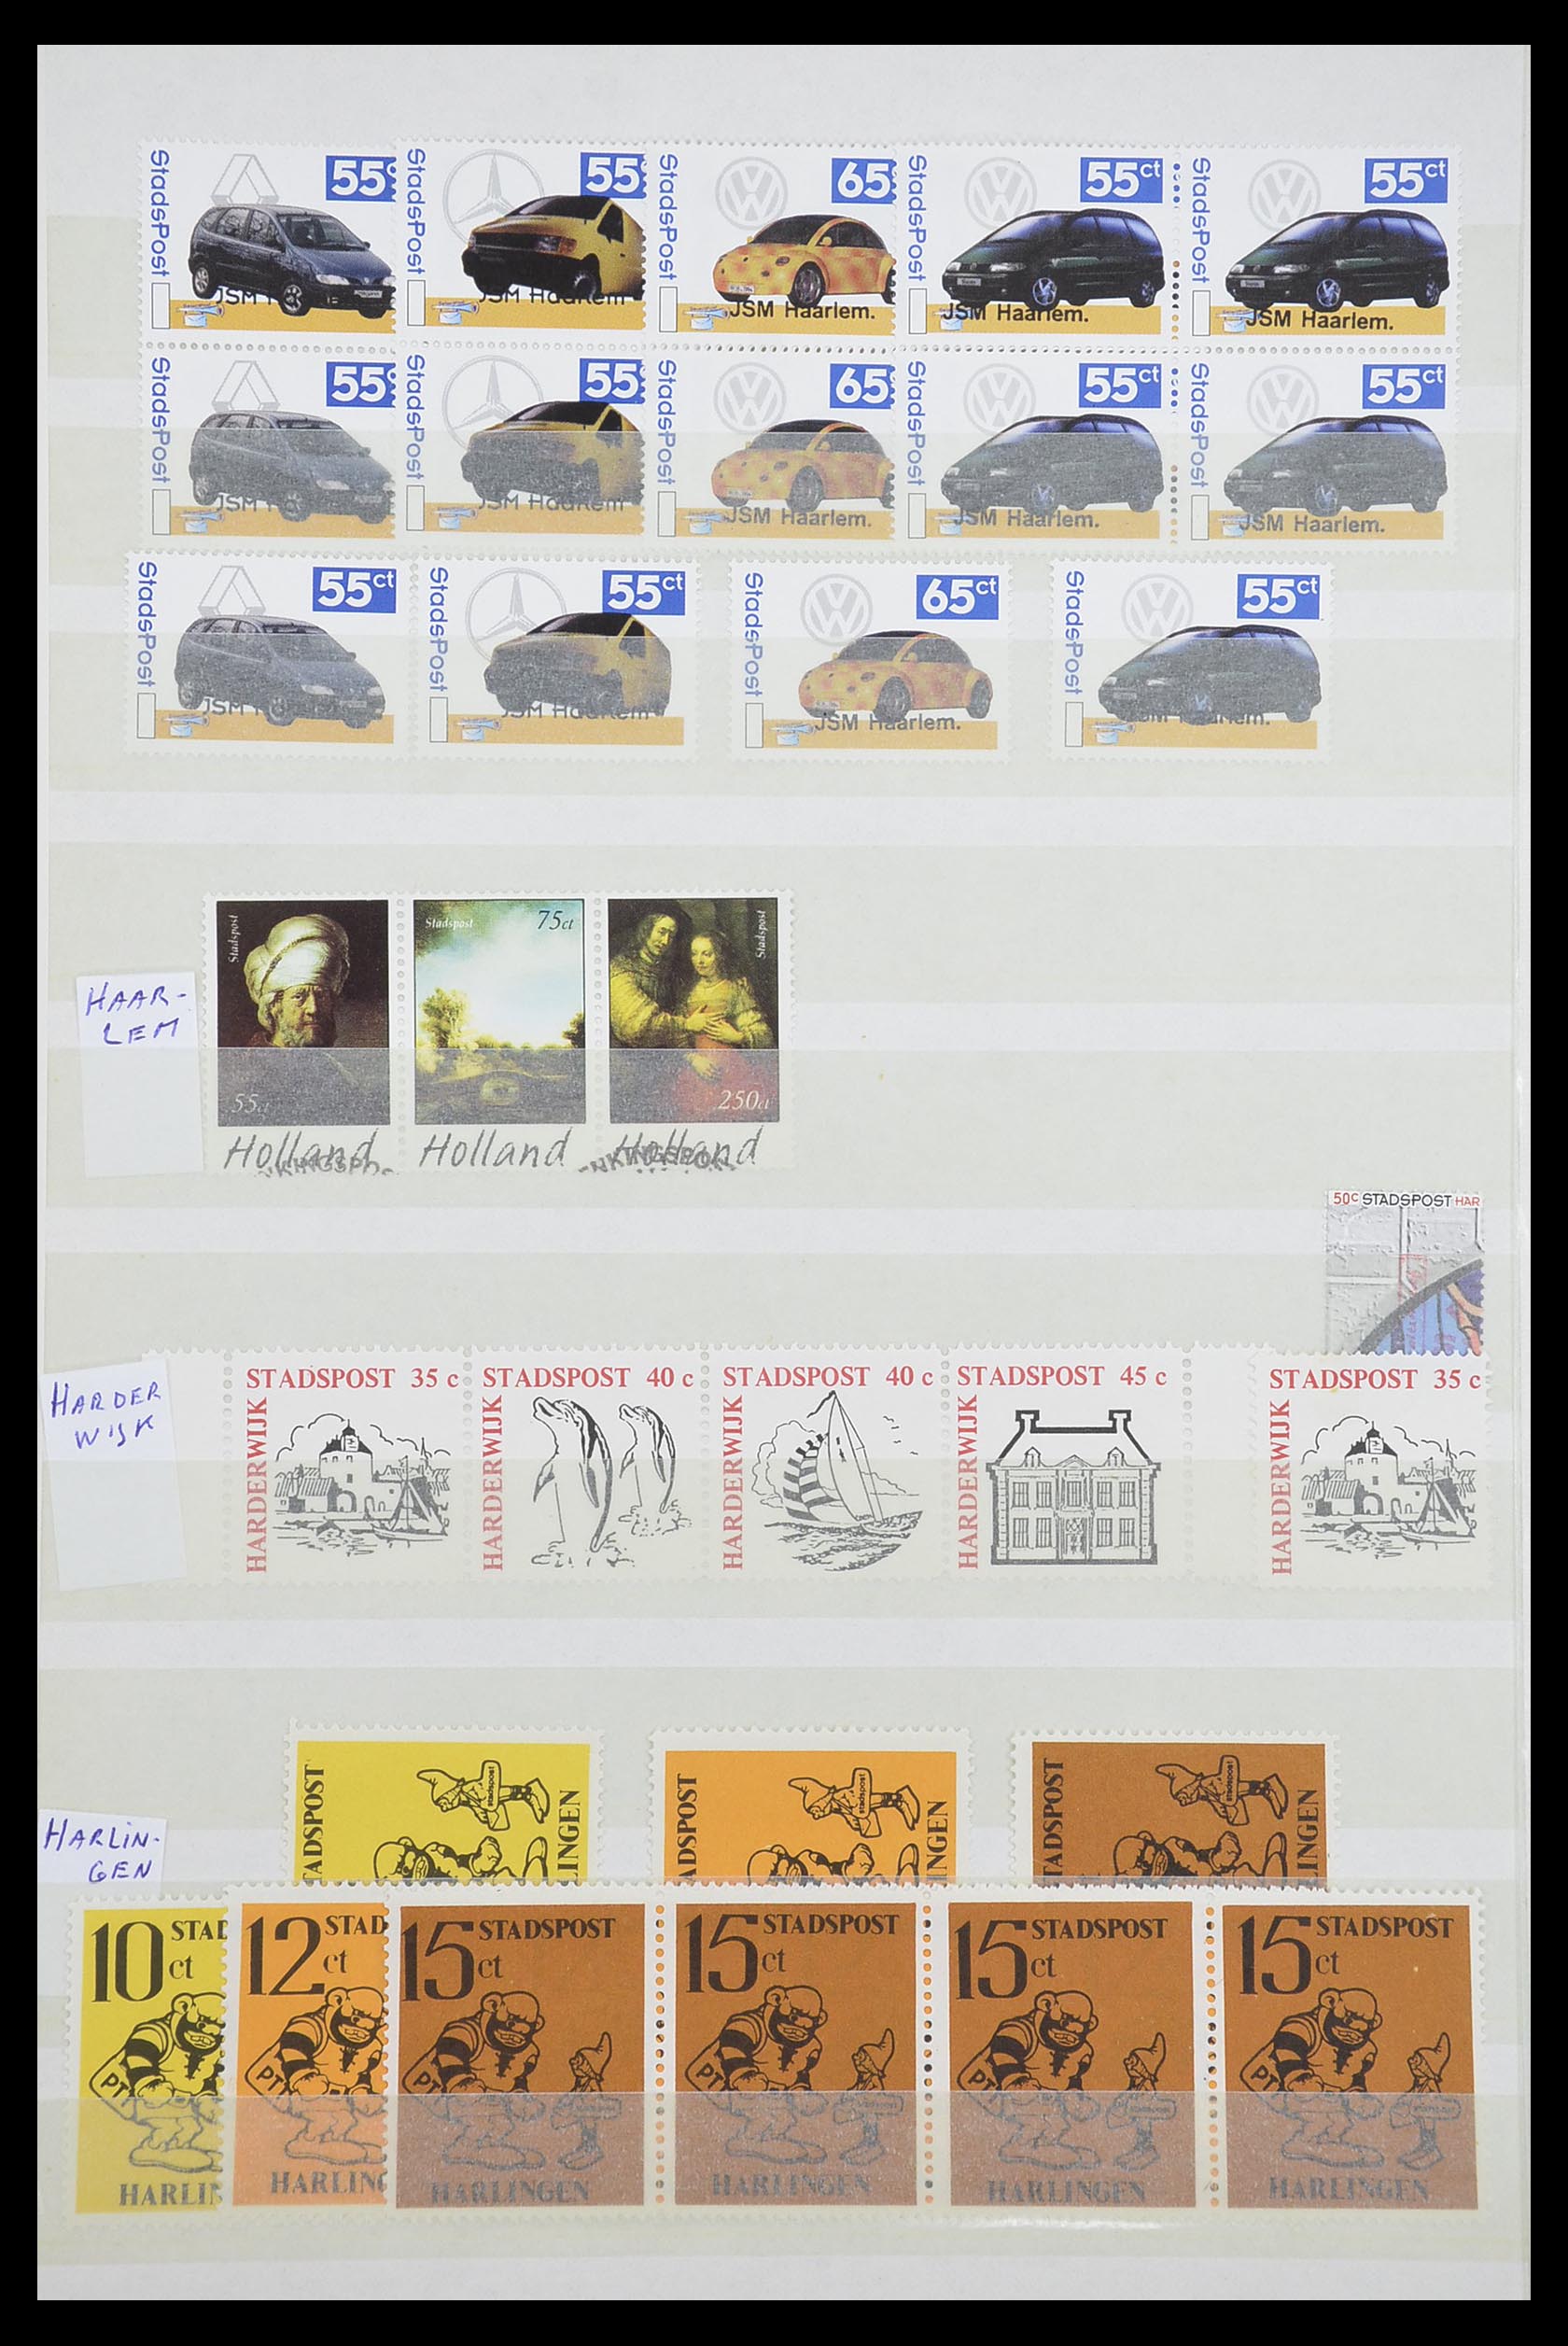 33543 565 - Postzegelverzameling 33543 Nederland stadspost 1969-2017.